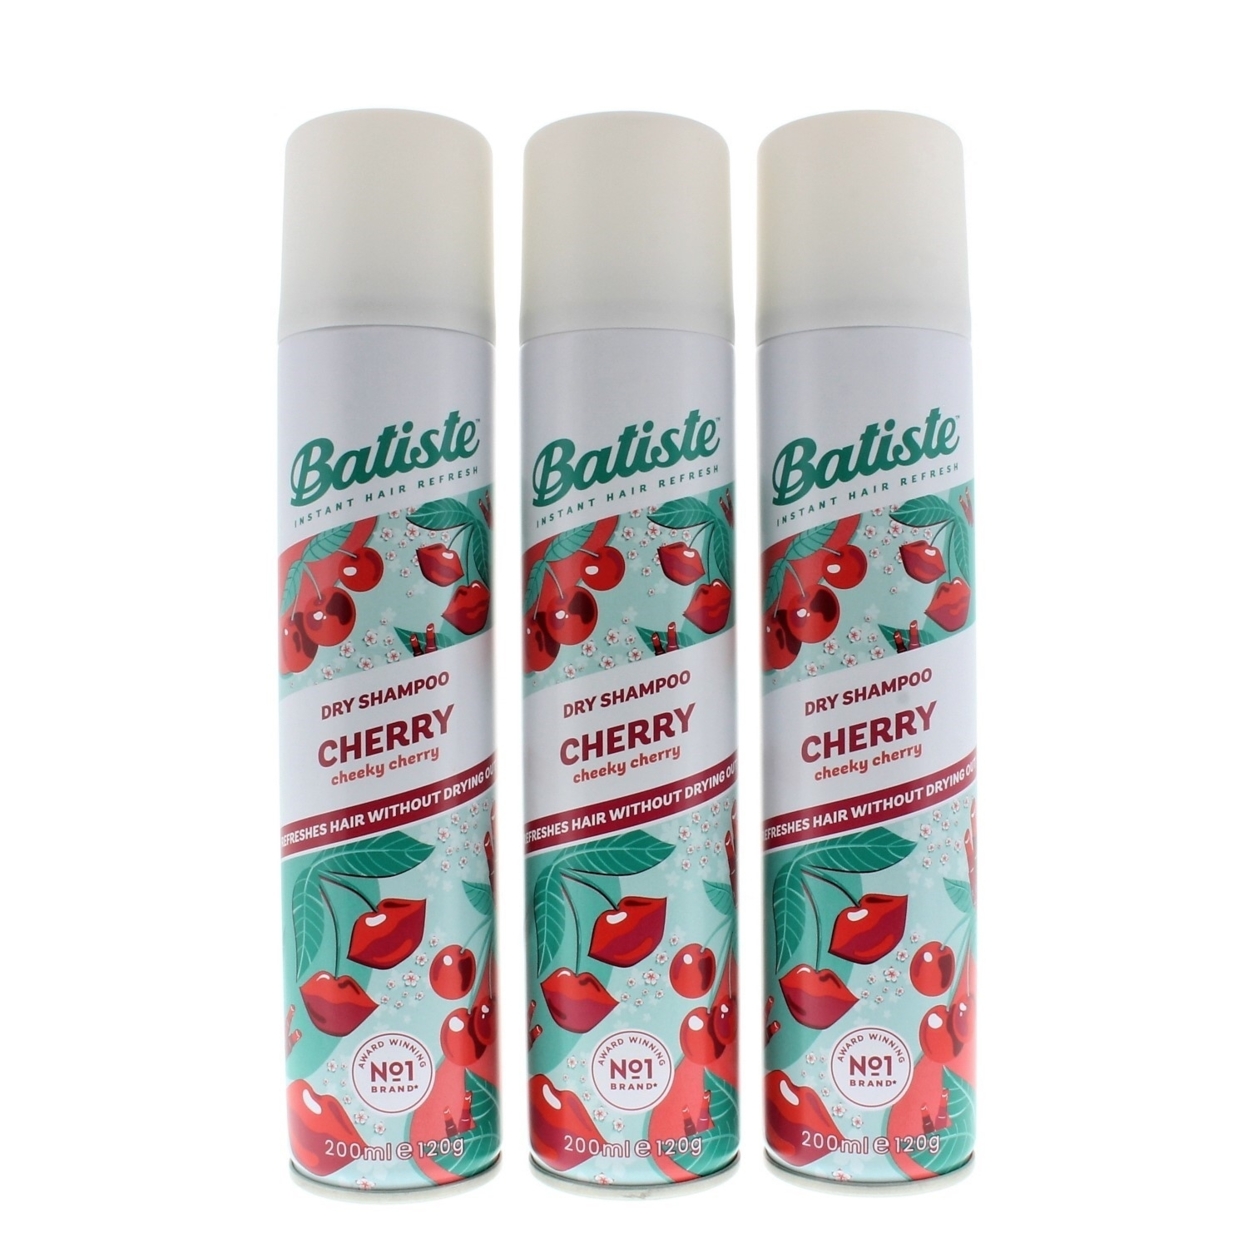 Batiste Instant Hair Refresh Dry Shampoo Cherry Cheeky Cherry 200ml/120g (3 PACK)